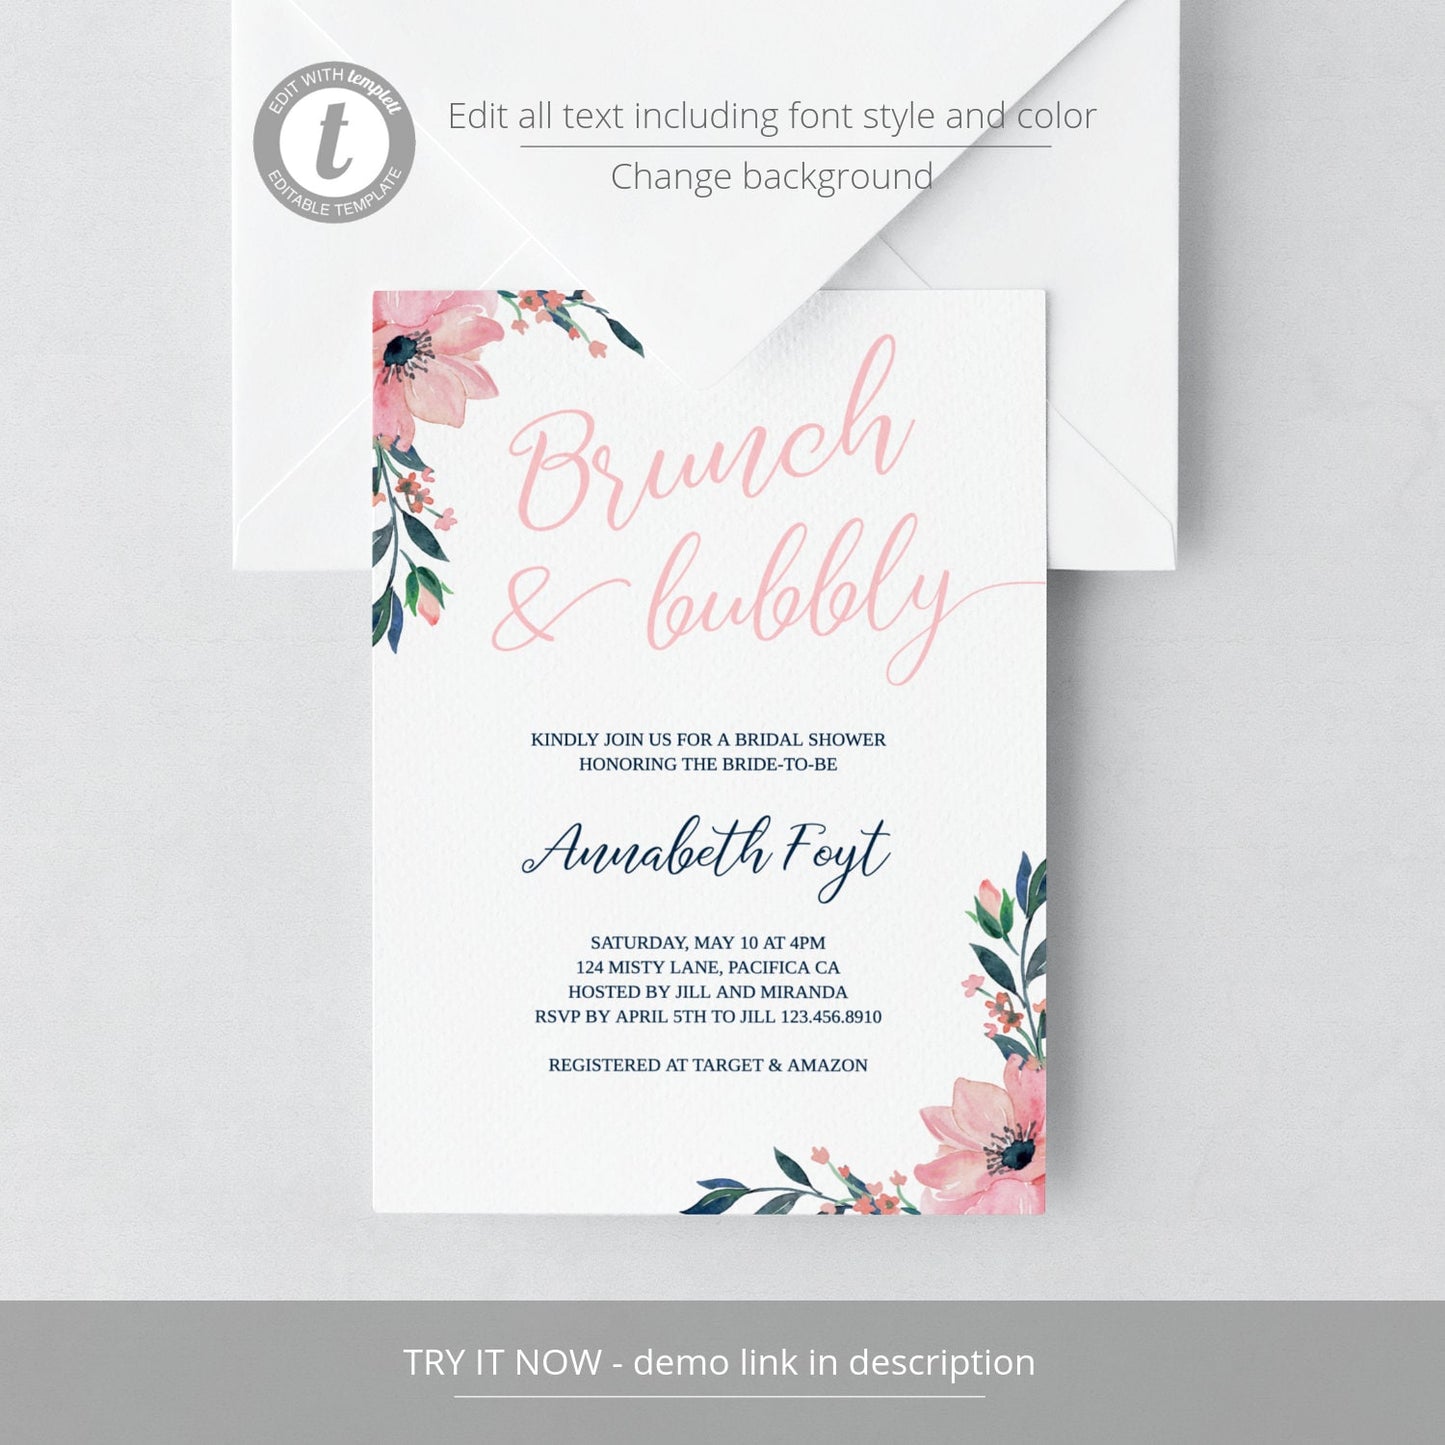 Editable Brunch and Bubbly Bridal Shower Invitation Pink Blush Floral Boho Bridal Shower Invite Template